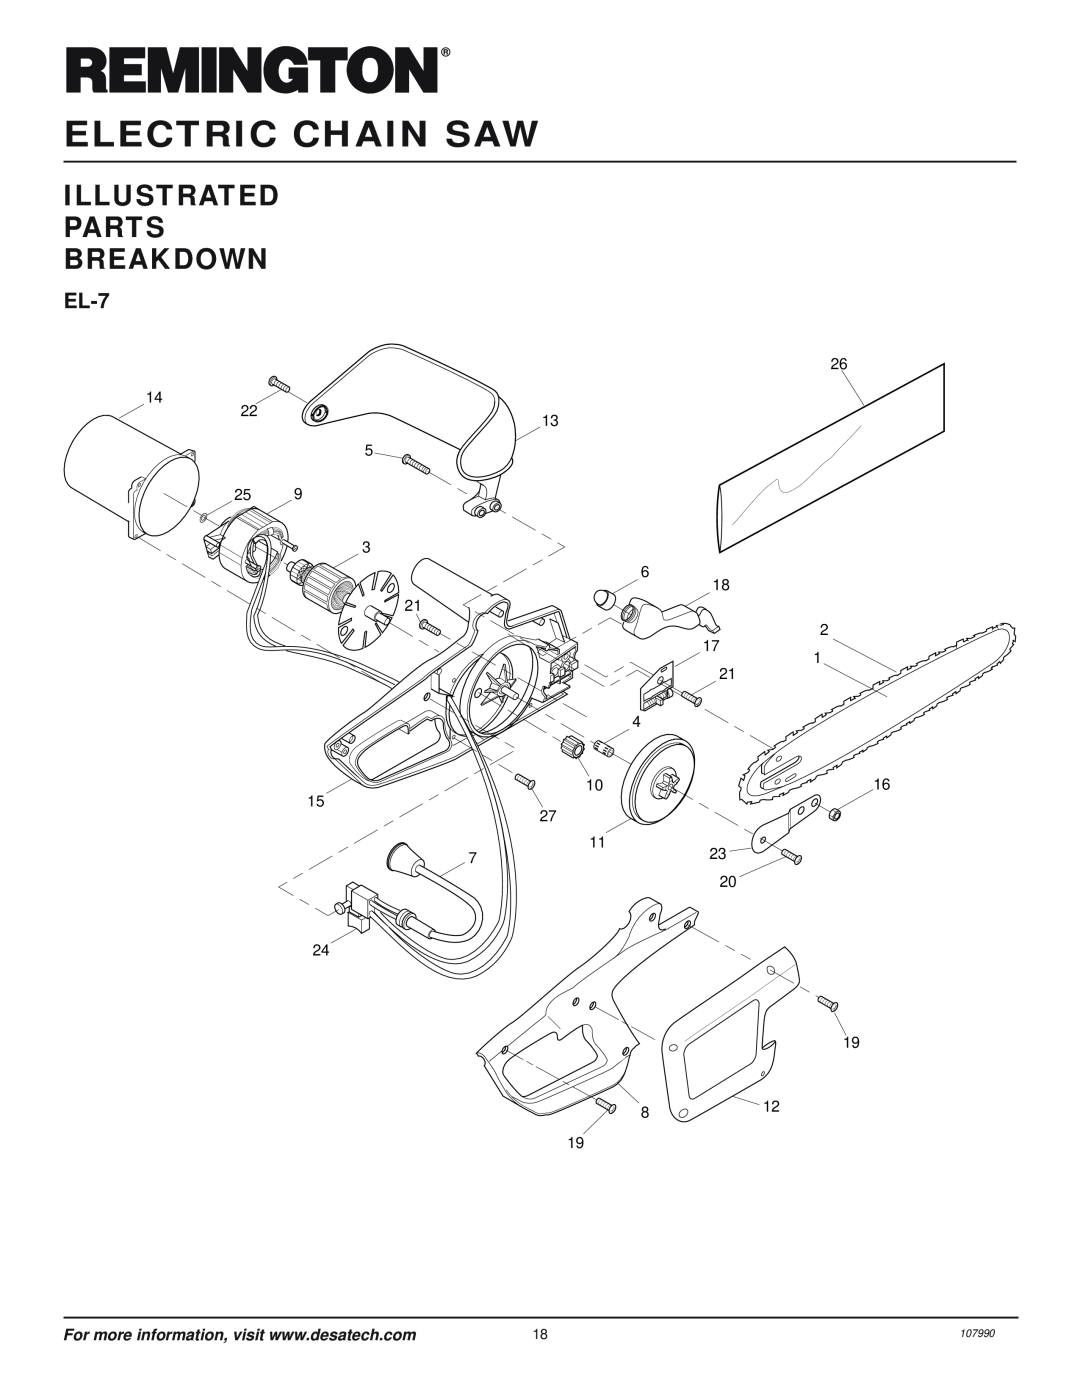 Desa & 099039J, LNT-2: 076728K, 100089-07 owner manual EL-7, Electric Chain Saw, Illustrated Parts Breakdown, 107990 